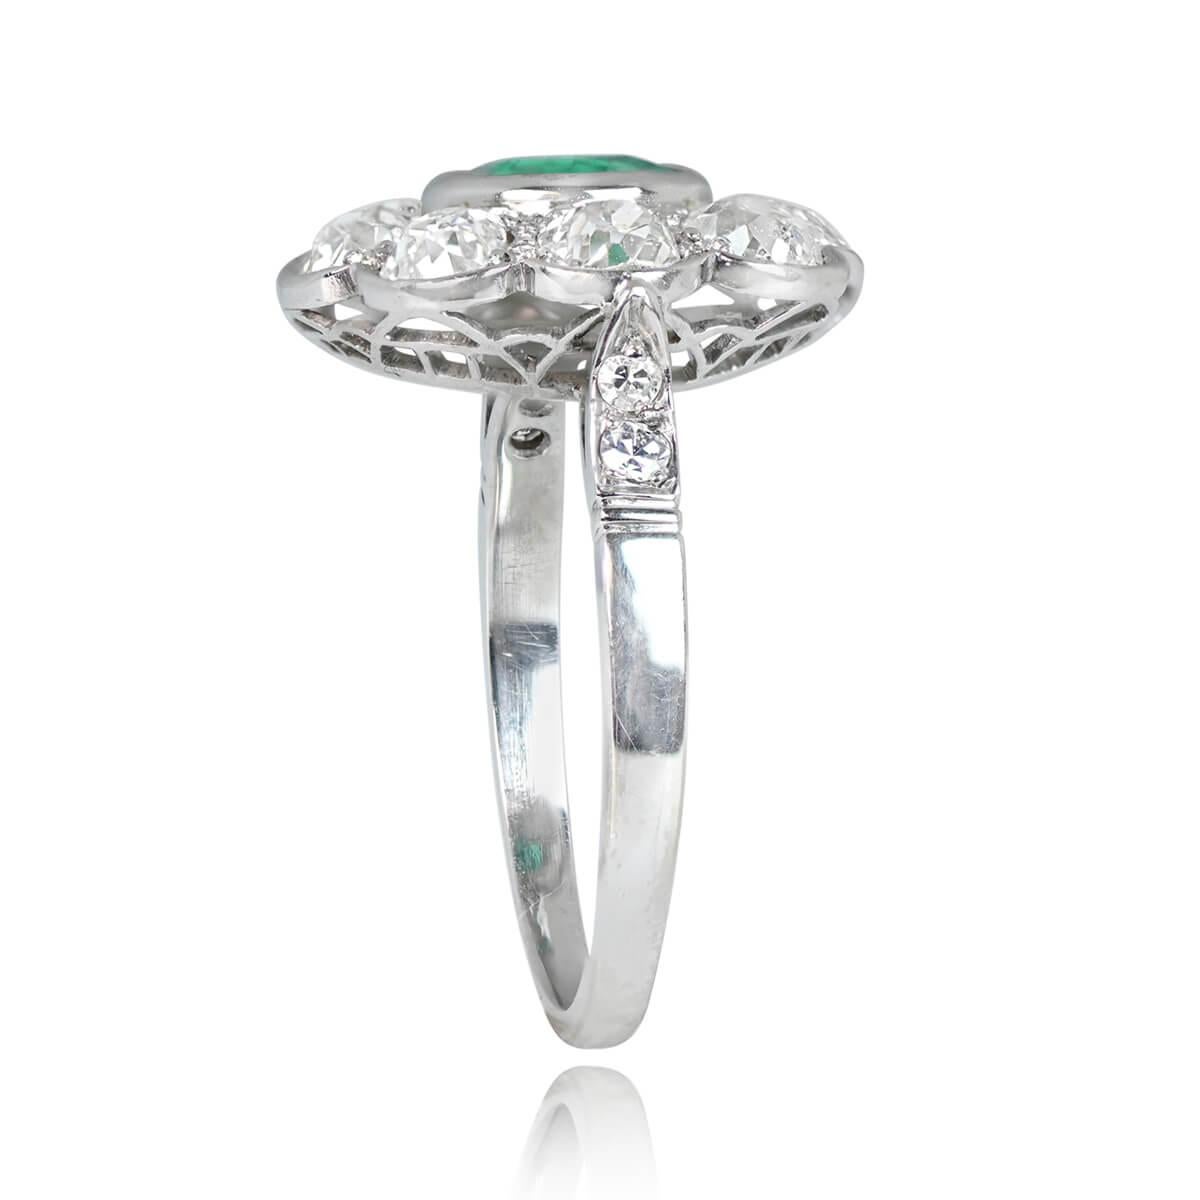 Edwardian Antique GIA 1.00ct Colombian Emerald Cluscter Ring, Diamond Halo, Platinum